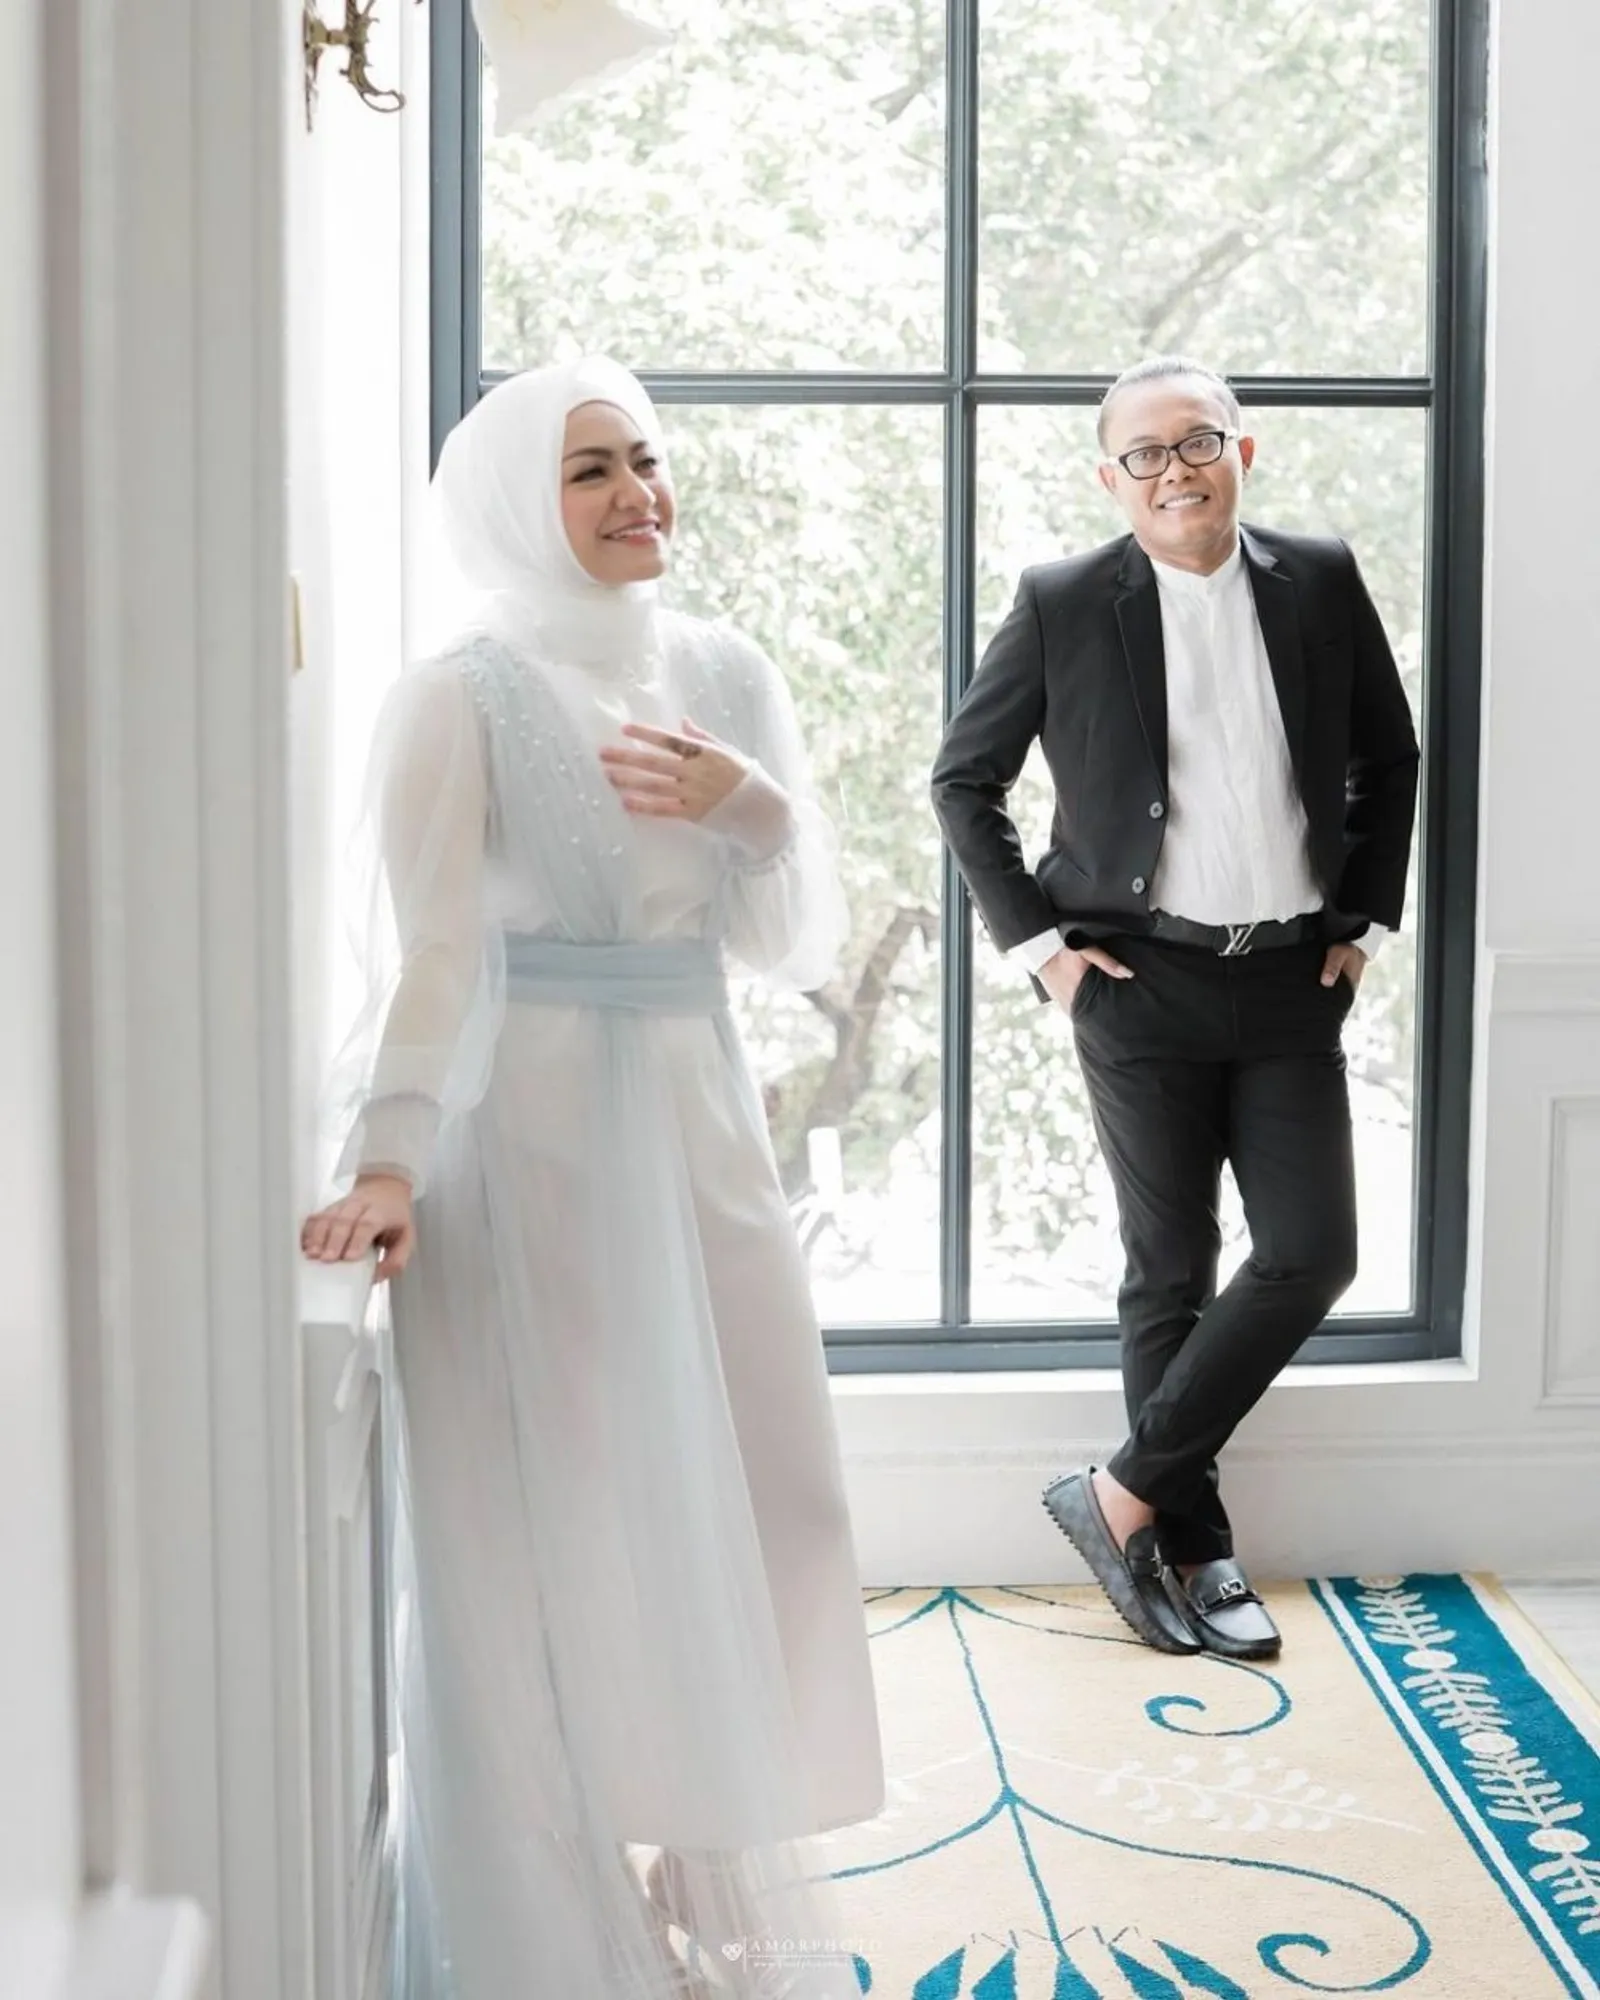 Manis dan Kocak, Intip 10 Ide Pre-Wedding Tanpa Bermesraan a la Artis